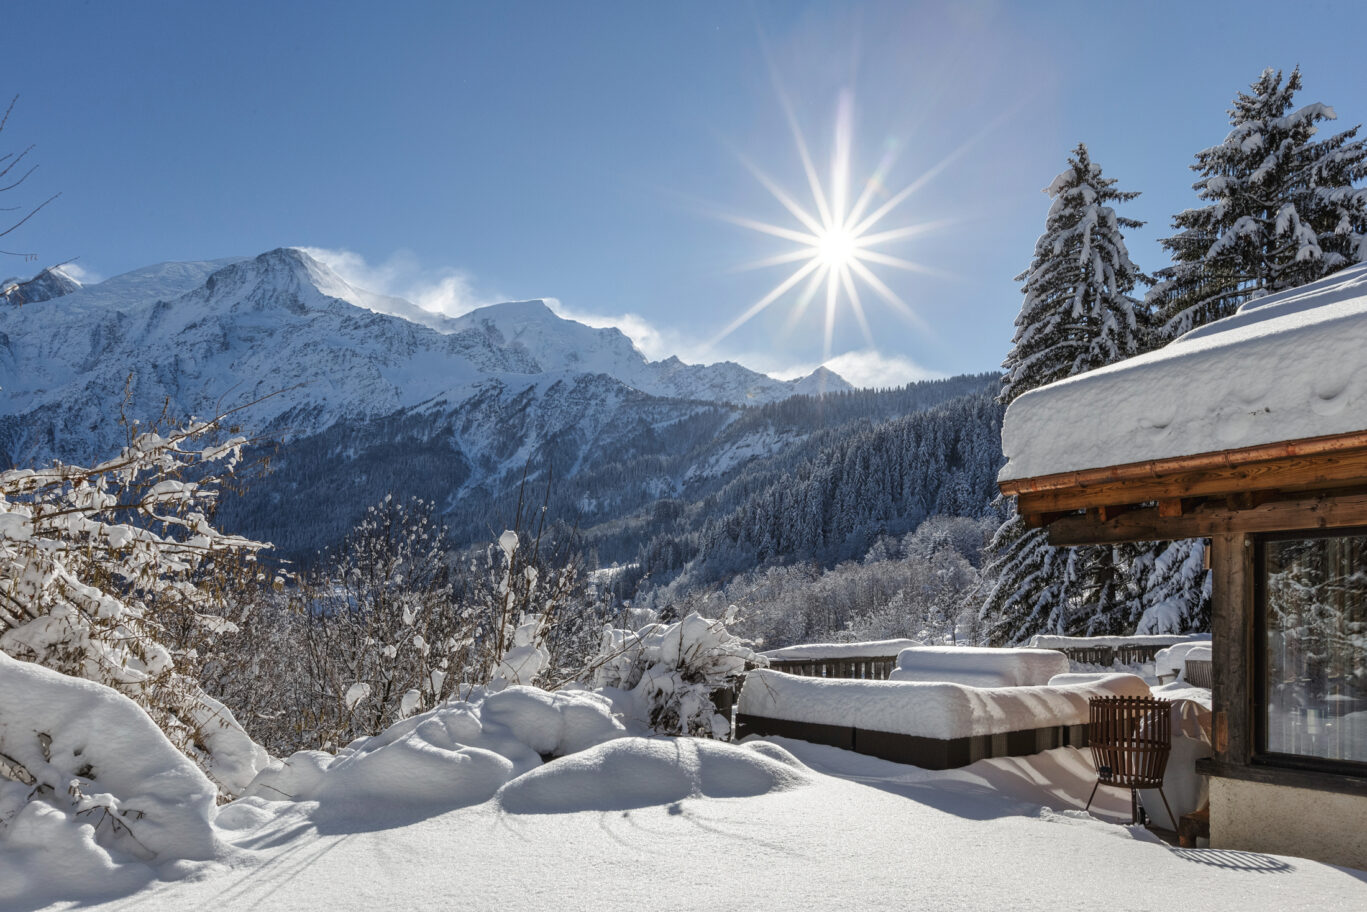 Chamonix luxury chalet Peter Pan in the snow